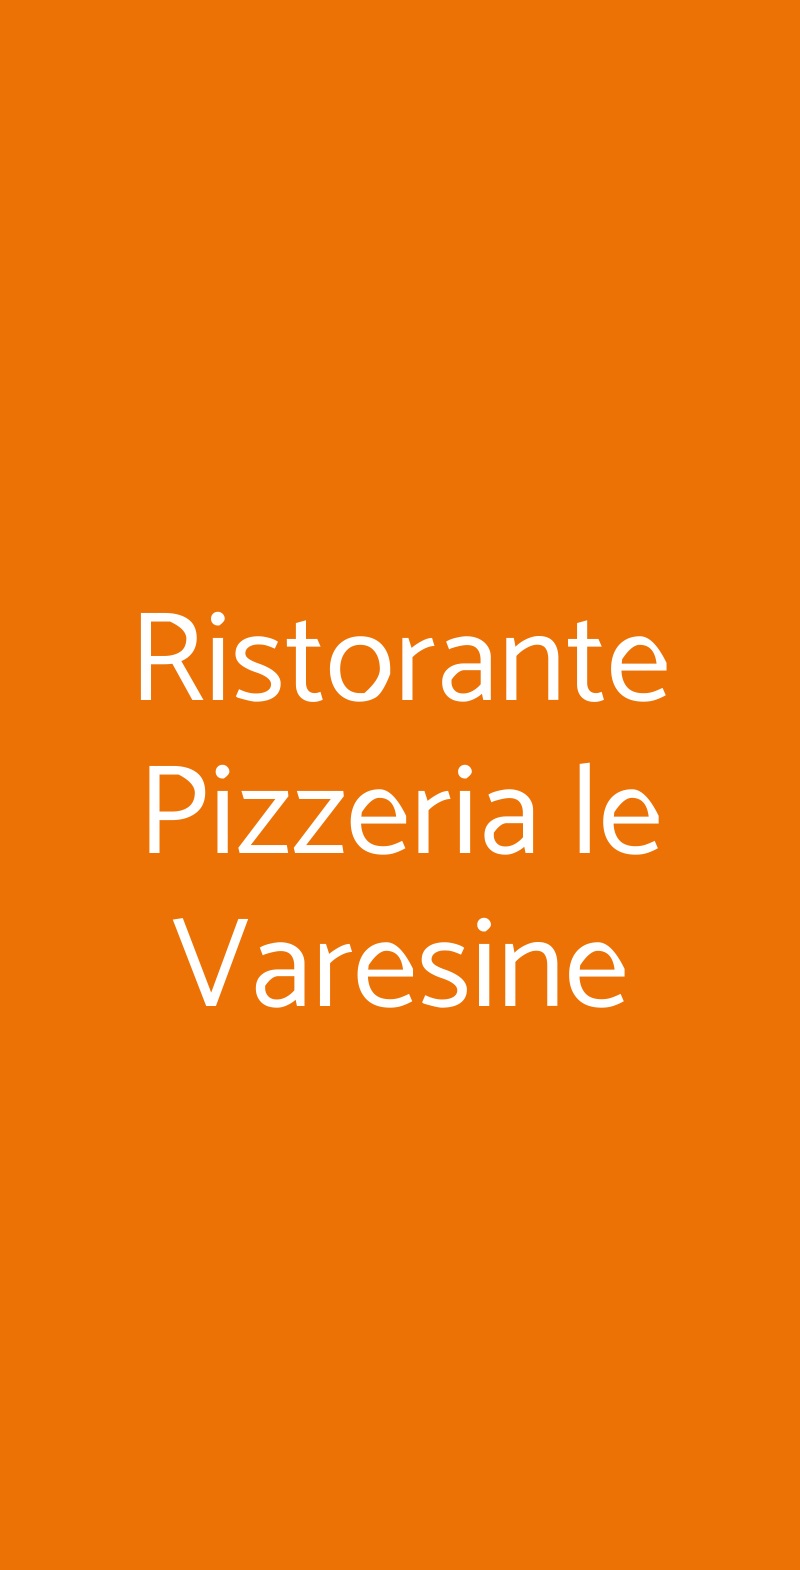 Ristorante Pizzeria le Varesine Milano menù 1 pagina